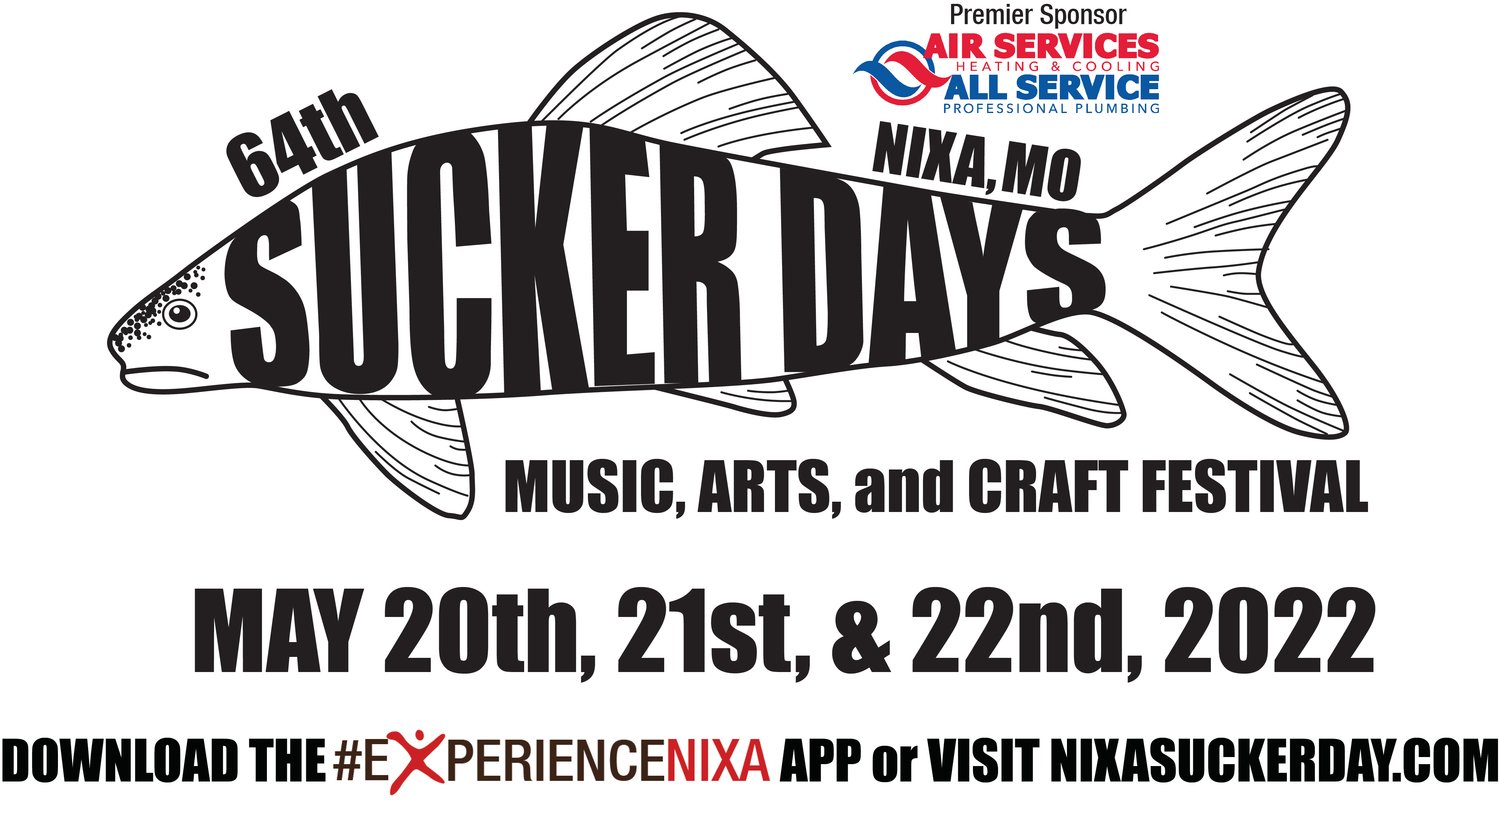 Nixa Sucker Days fast approaching Christian County Headliner News